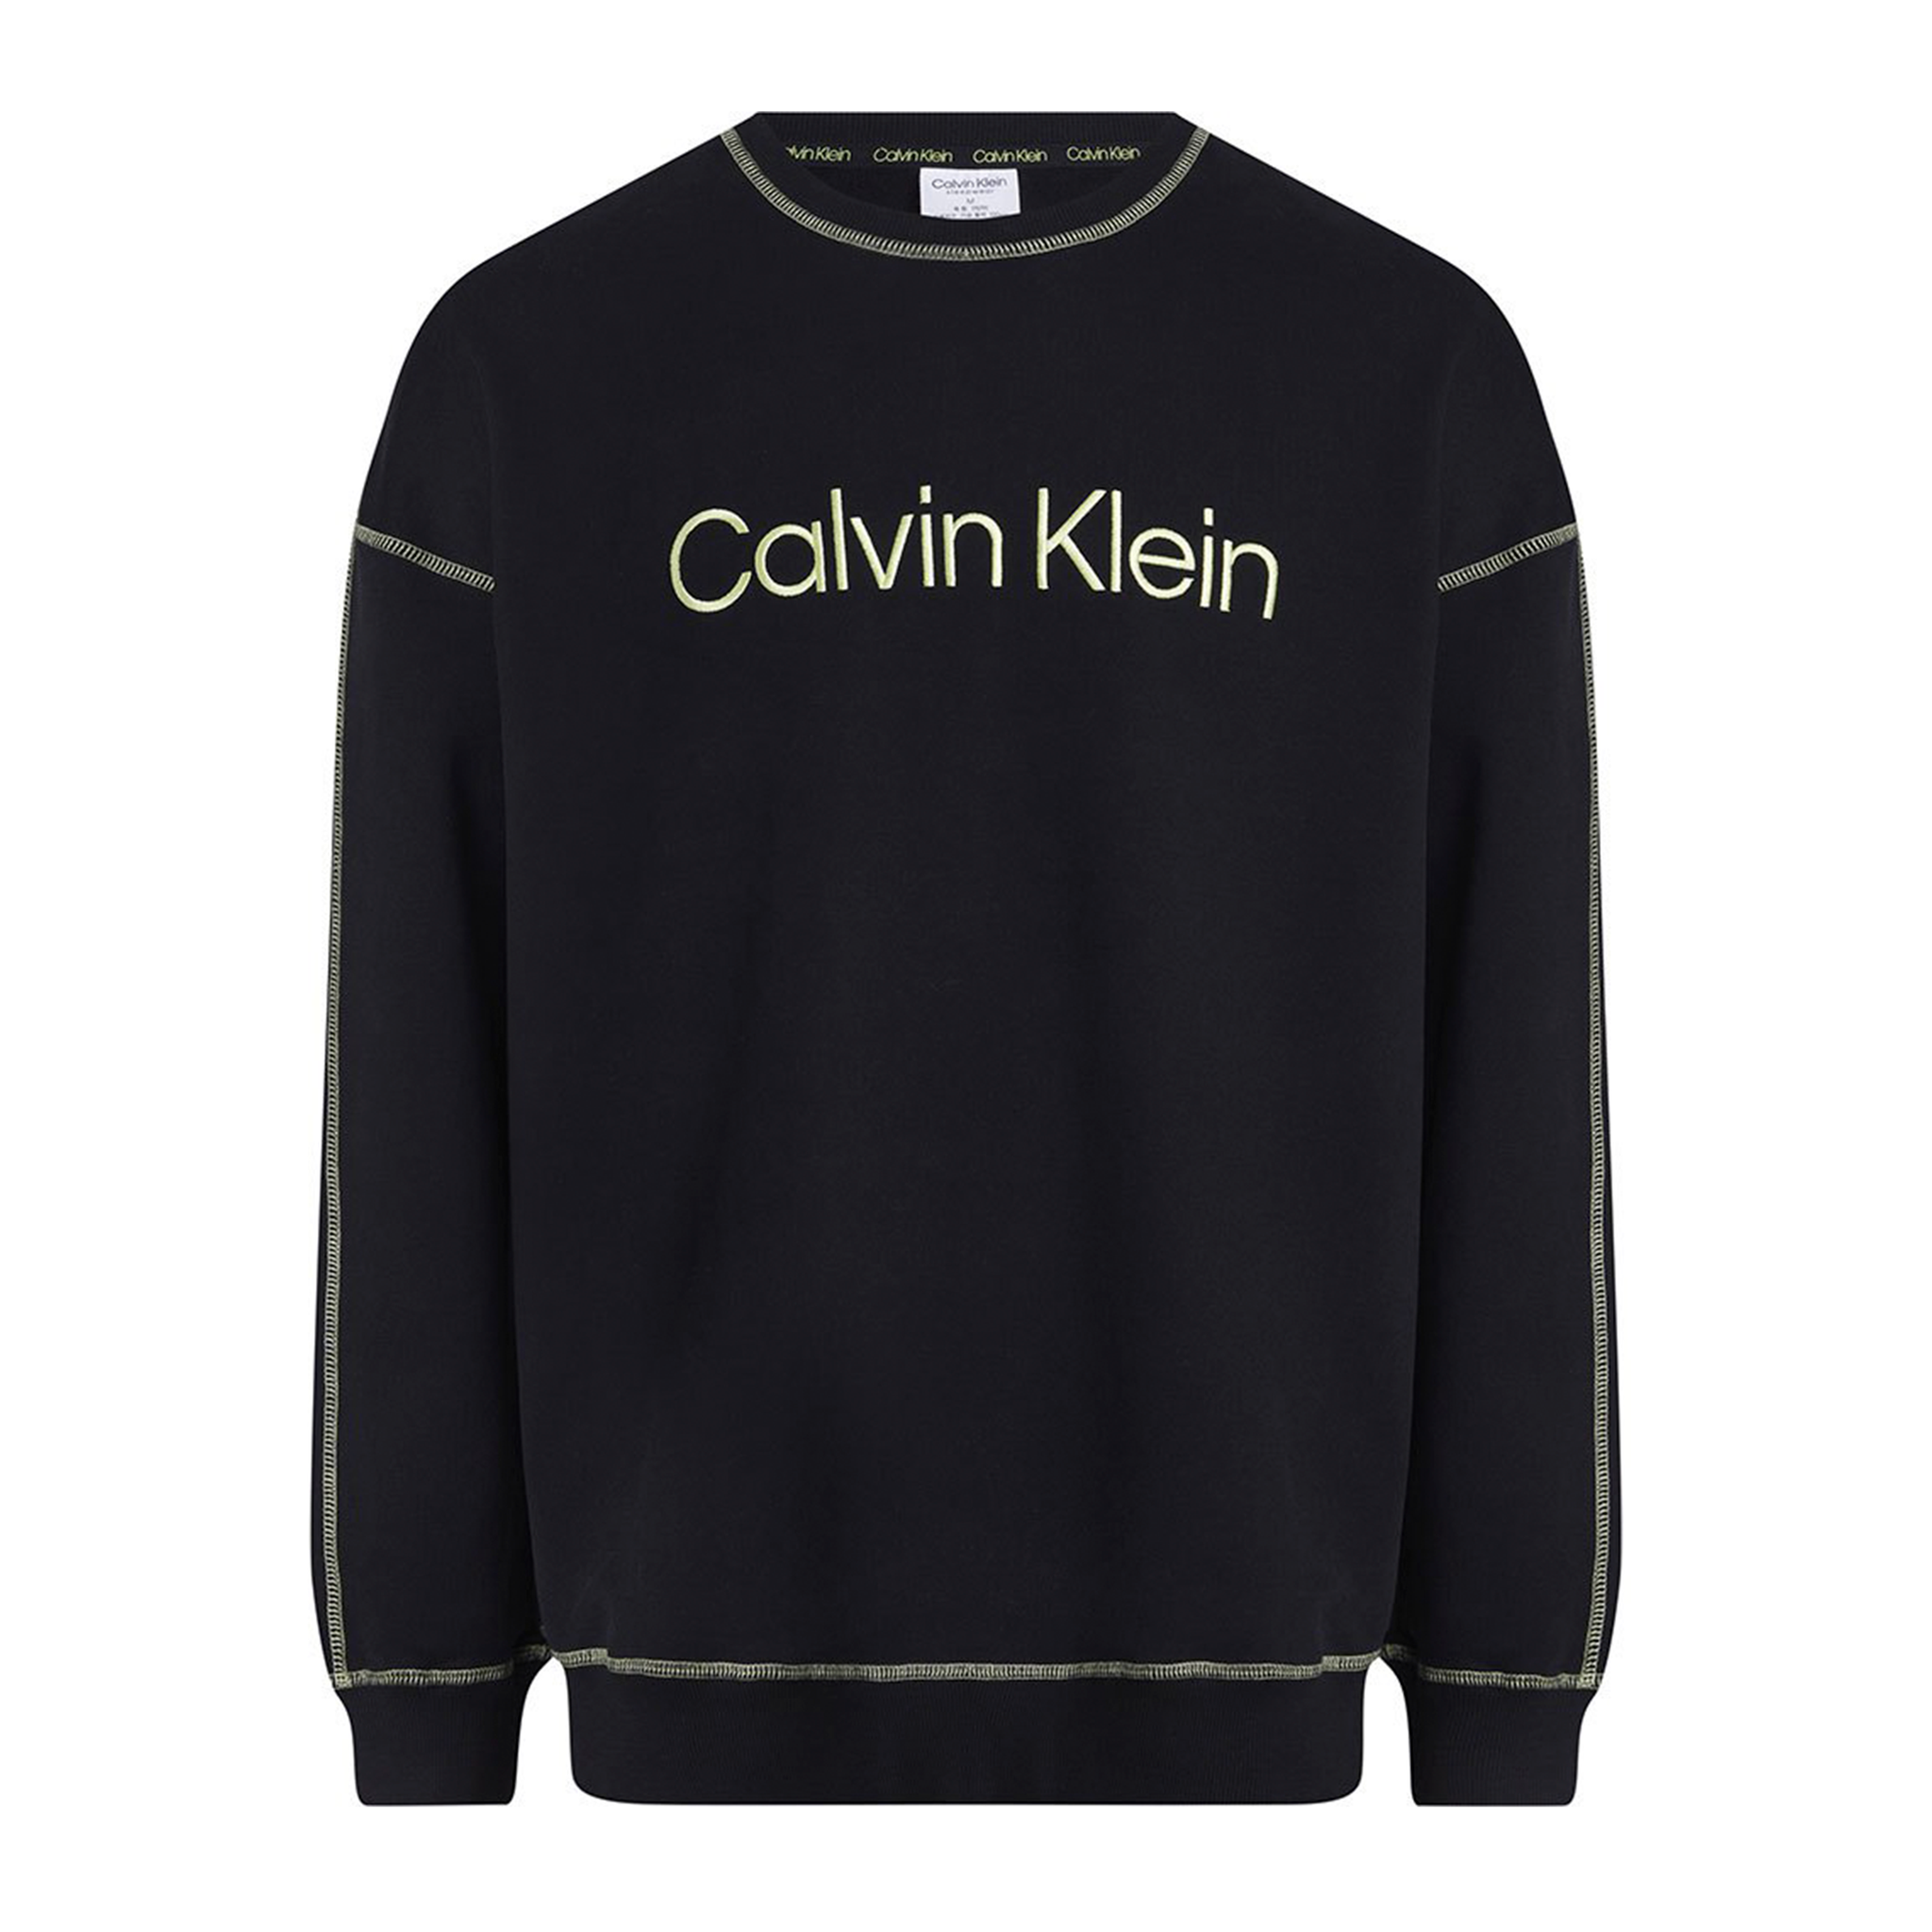 Calvin Klein Eco Lounge Long Sleeve Sweatshirt Black QS6702 - Free